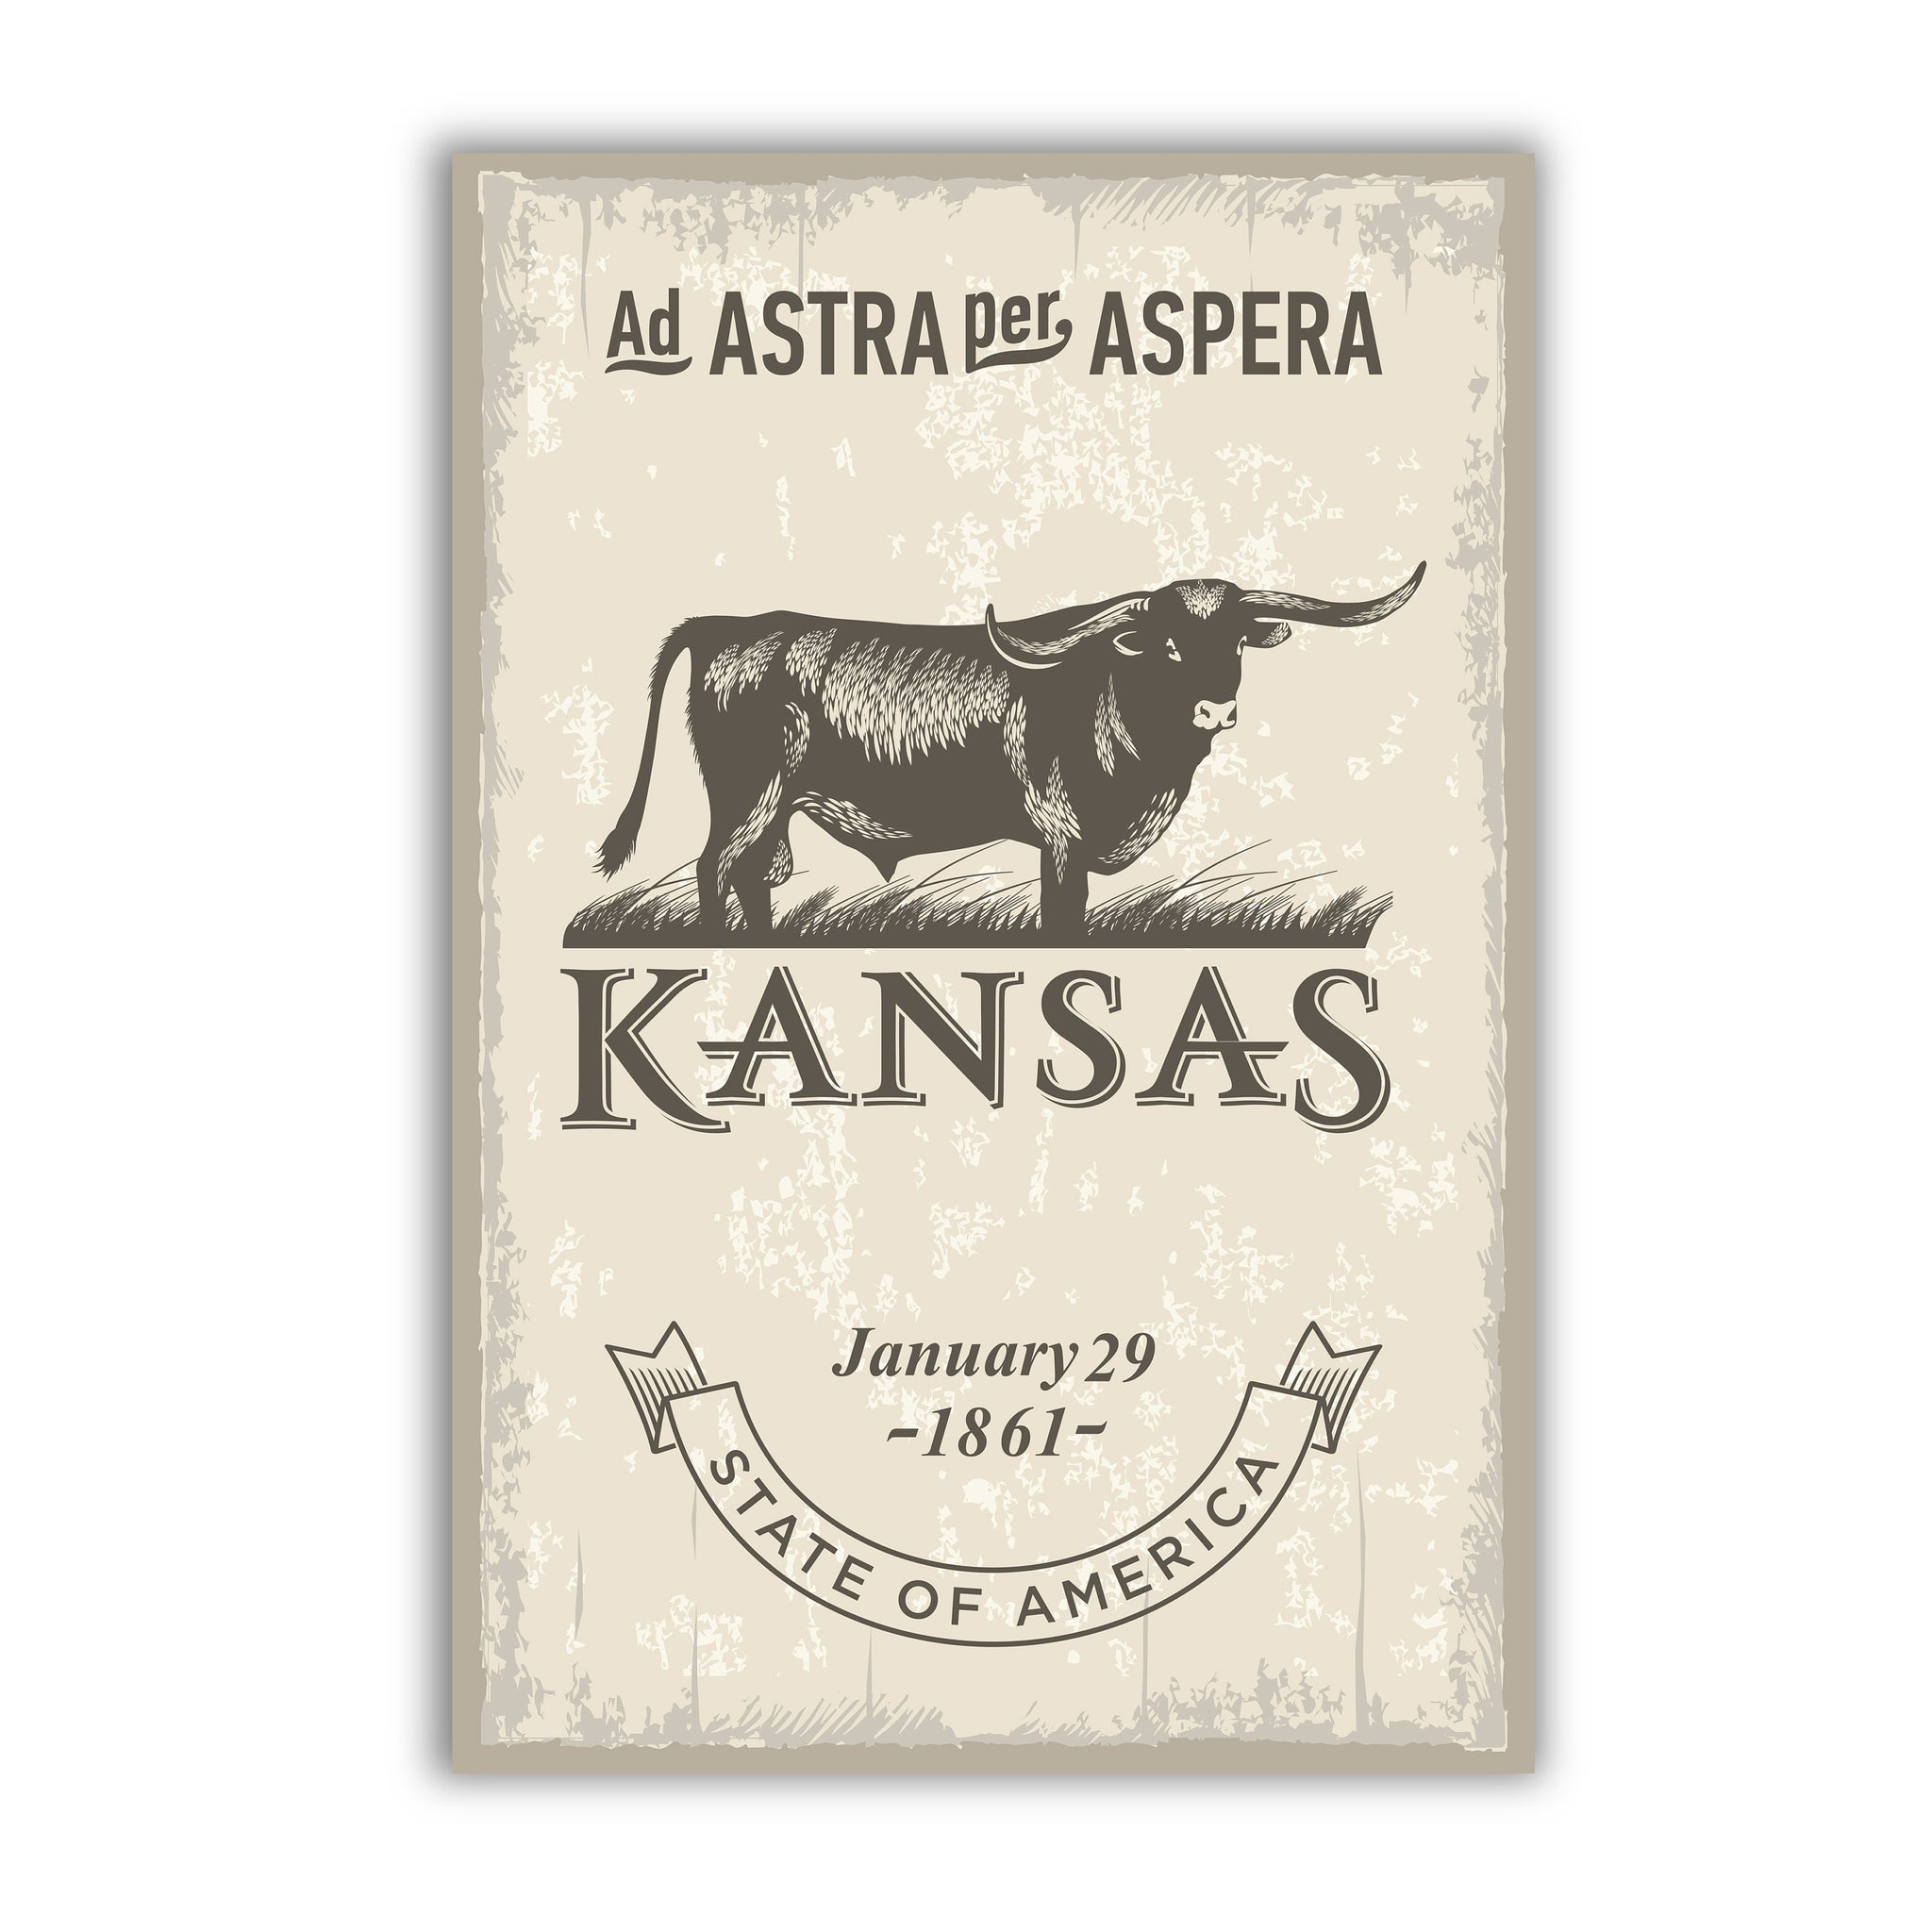 Kansas State Symbol Poster, Kansas State Poster Print, Kansas State Emblem Poster, Retro Travel State Poster, Home and Office Wall Art